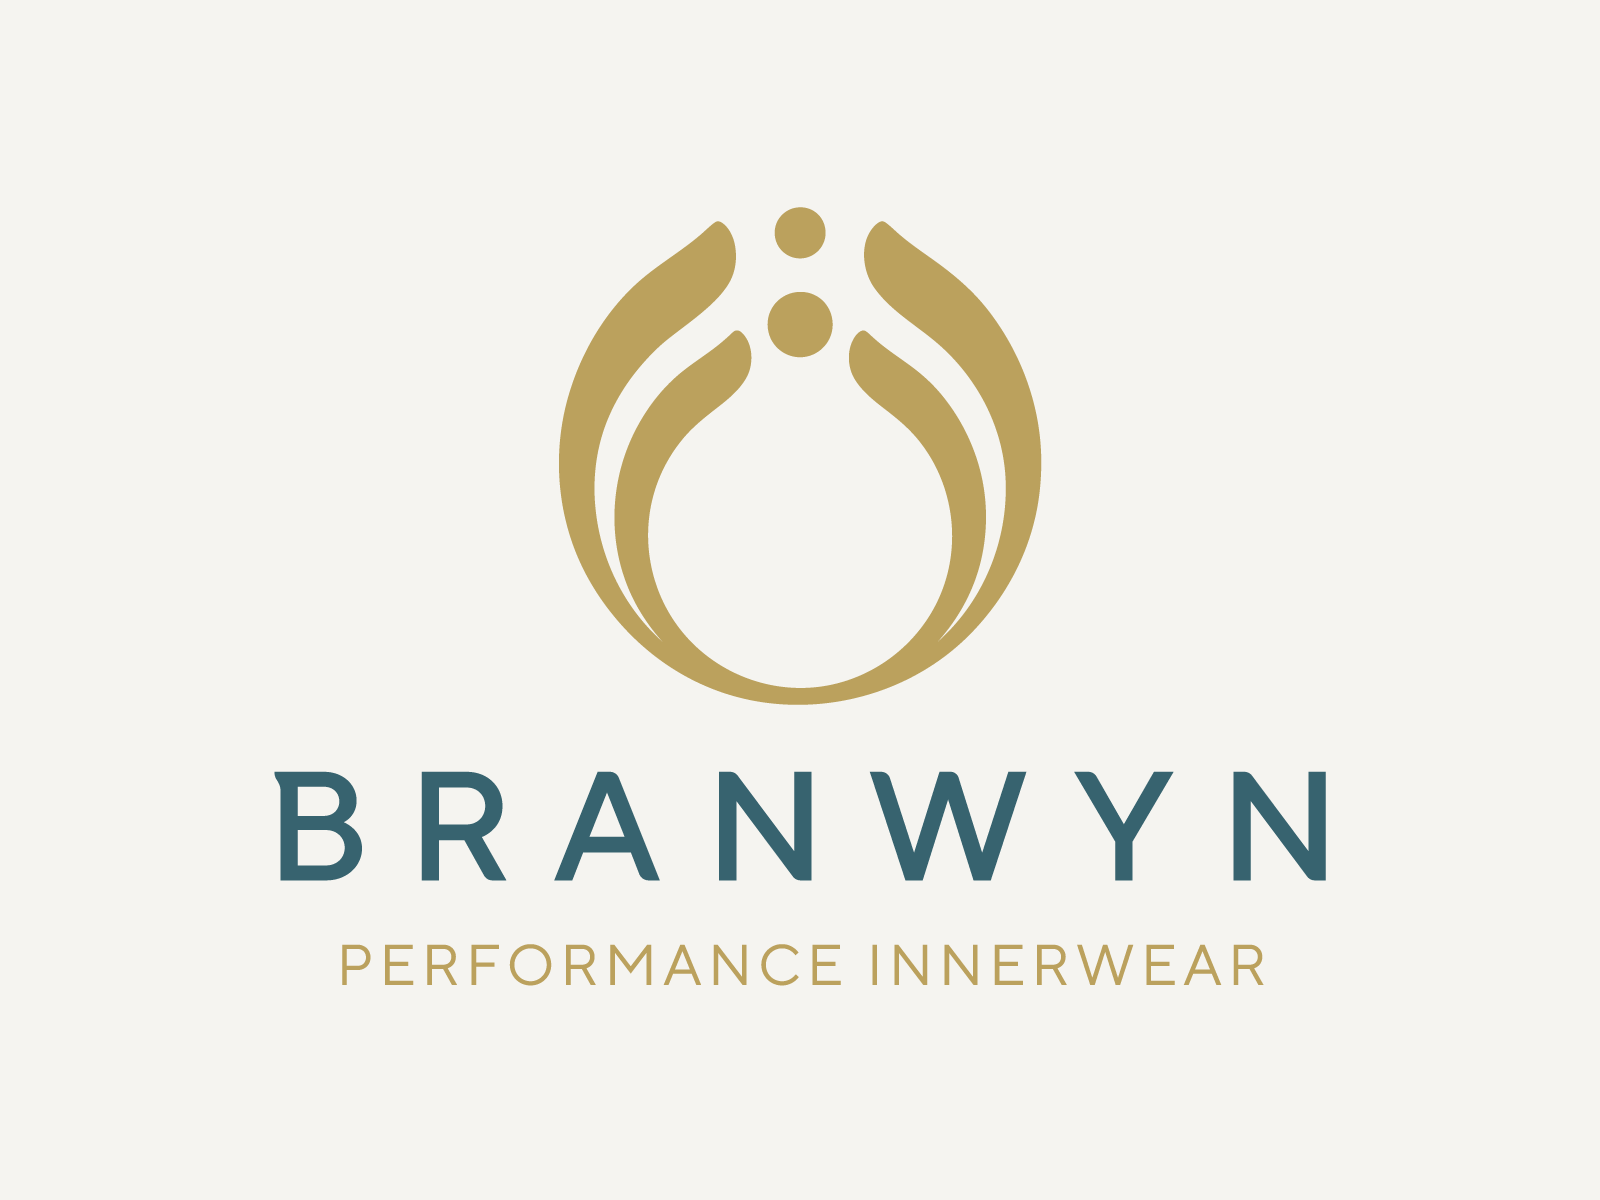 Branwyn Performance Innerwear Logo by David J Sorrell on Dribbble